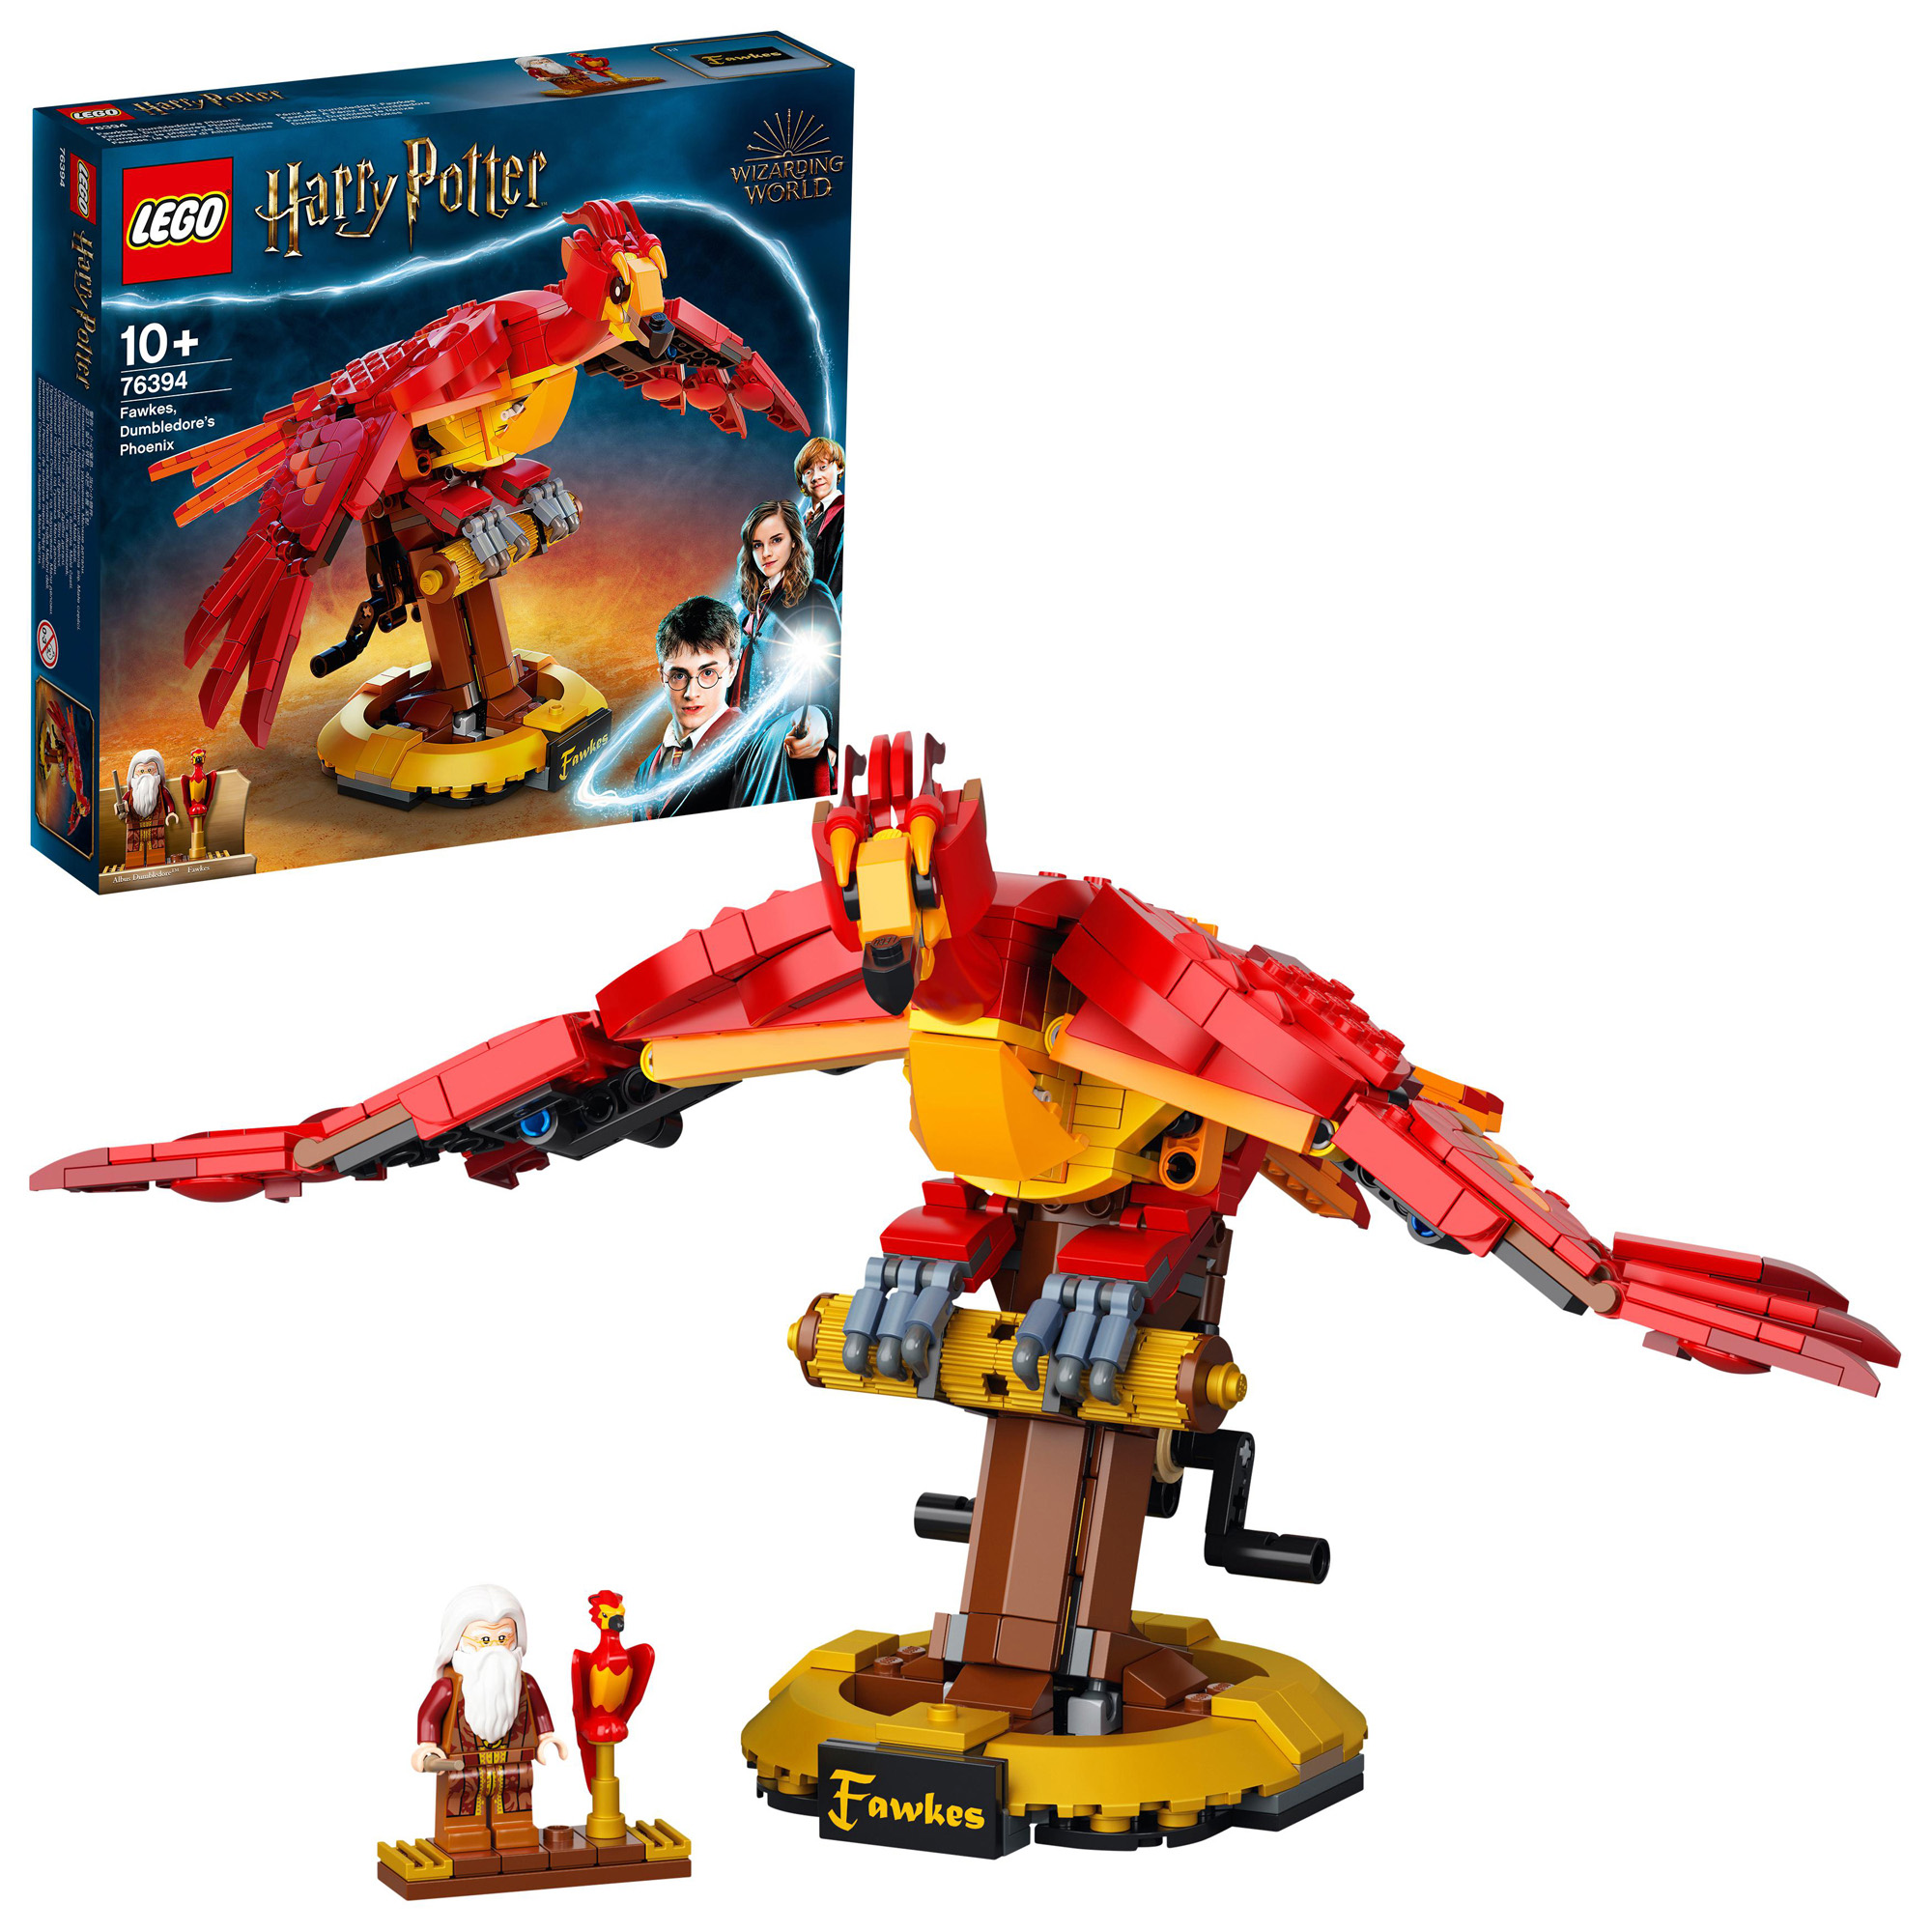 LEGO Harry Potter 76394 Fanny, la Fenice di Albus Silente - Harry Potter, LEGO